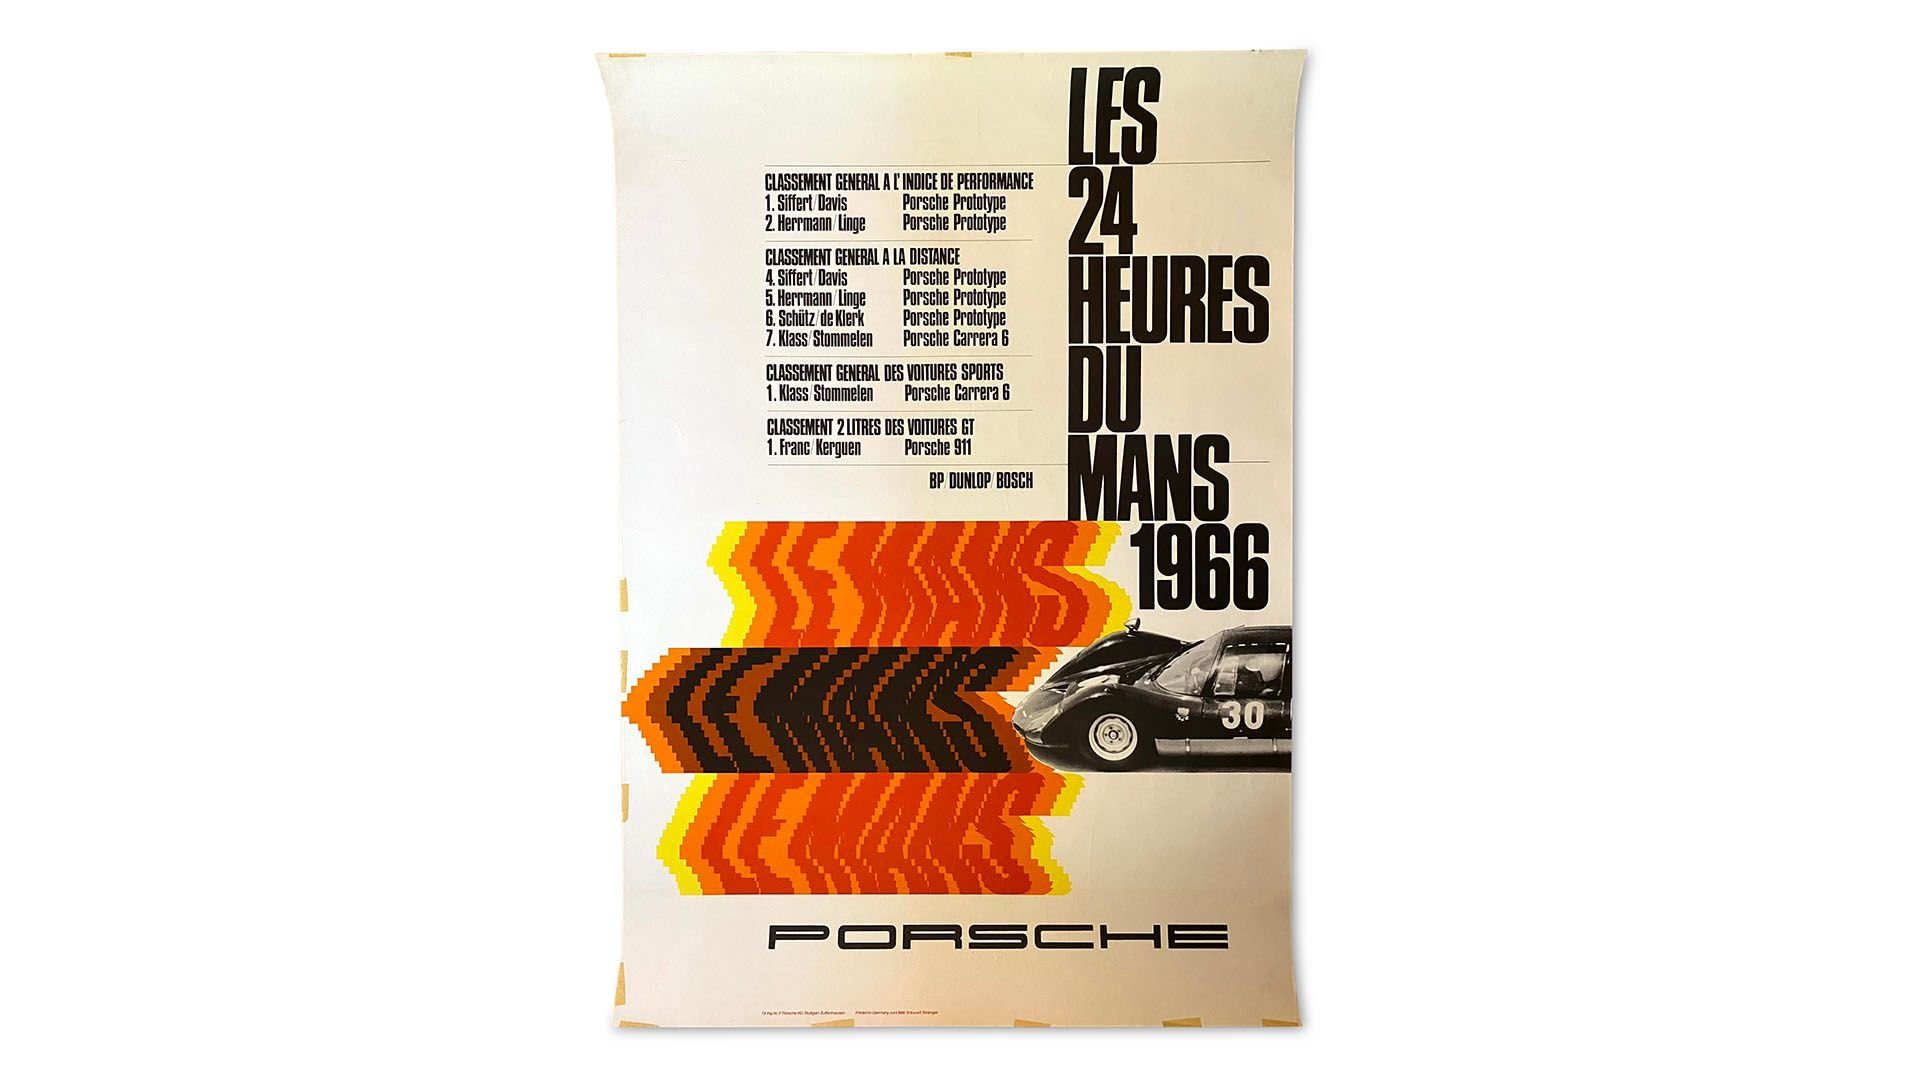 Group of 5 porsche sports racing prototype 904 906 910 bergspyder factory racing posters 1965 1967